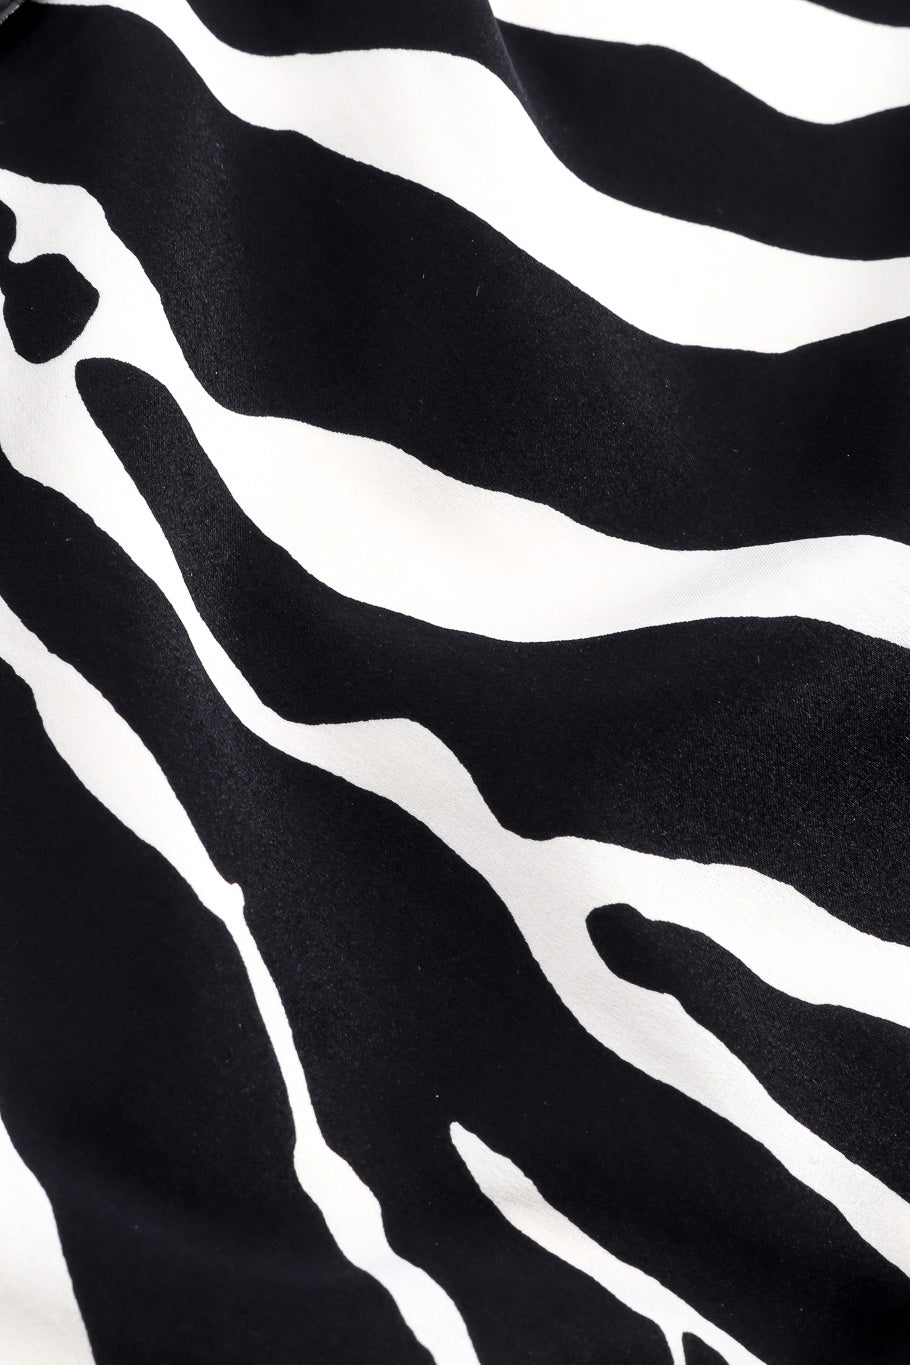 Dolce & Gabbana zebra print bustier tank top fabric details @recessla